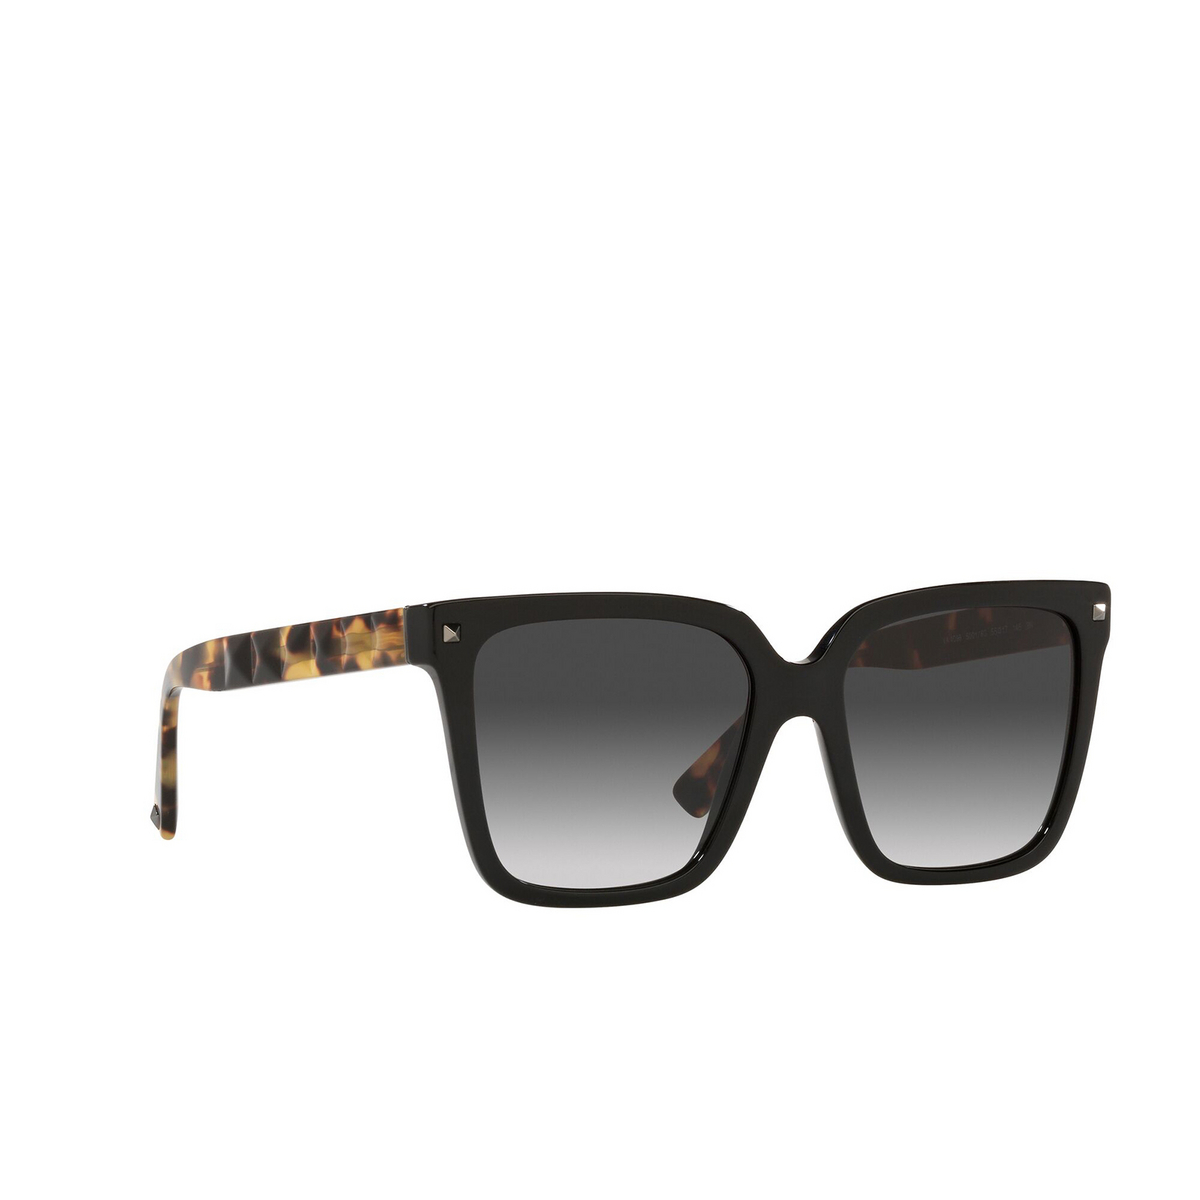 Valentino® Square Sunglasses: VA4098 color Black 50018G - three-quarters view.